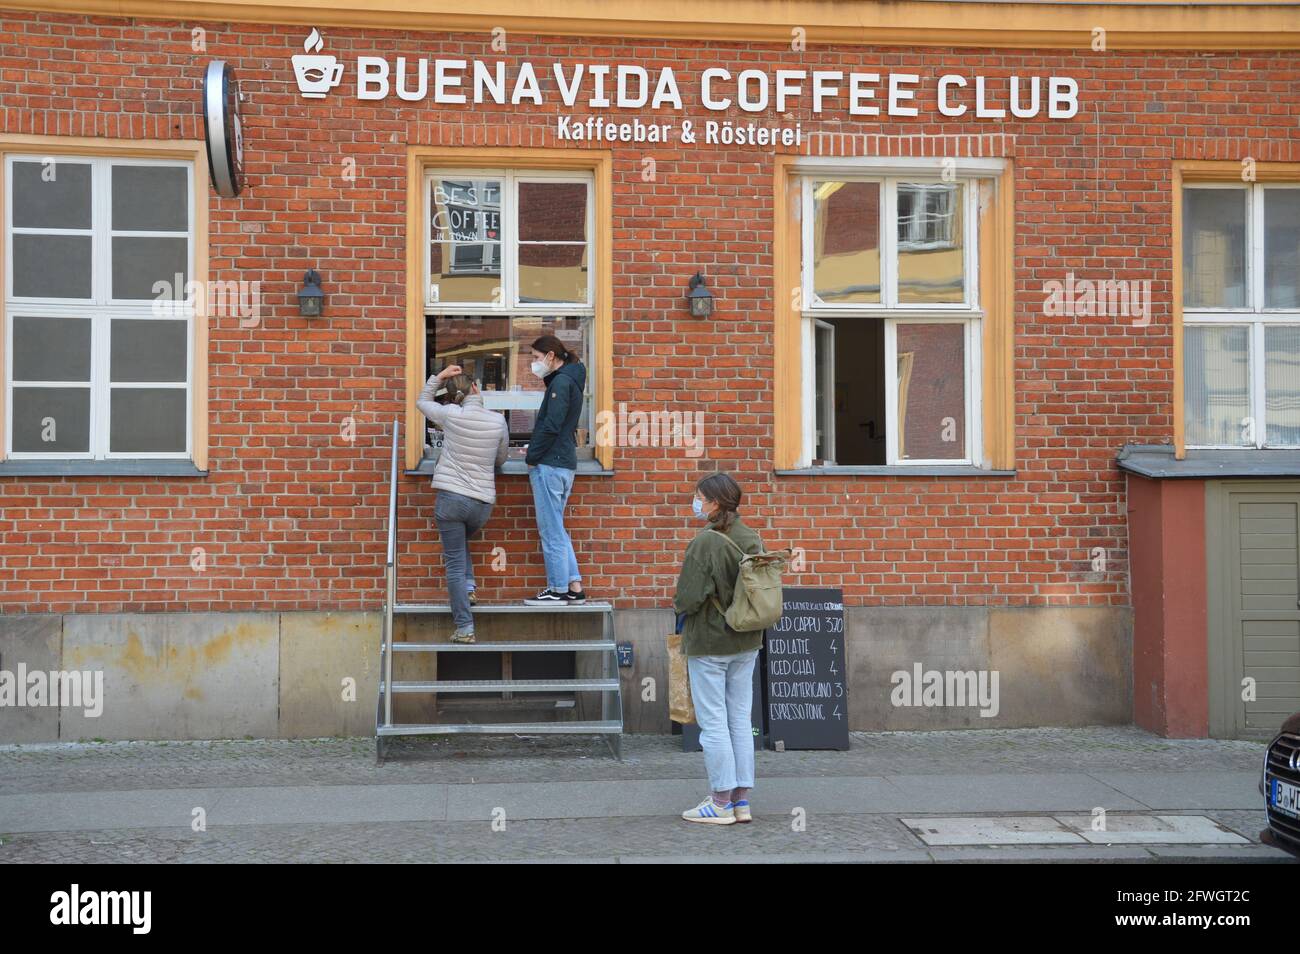 Buena Vida Coffee Club at Brandenburger Strasse in Potsdam, Germany - 21st May 2021. Stock Photo